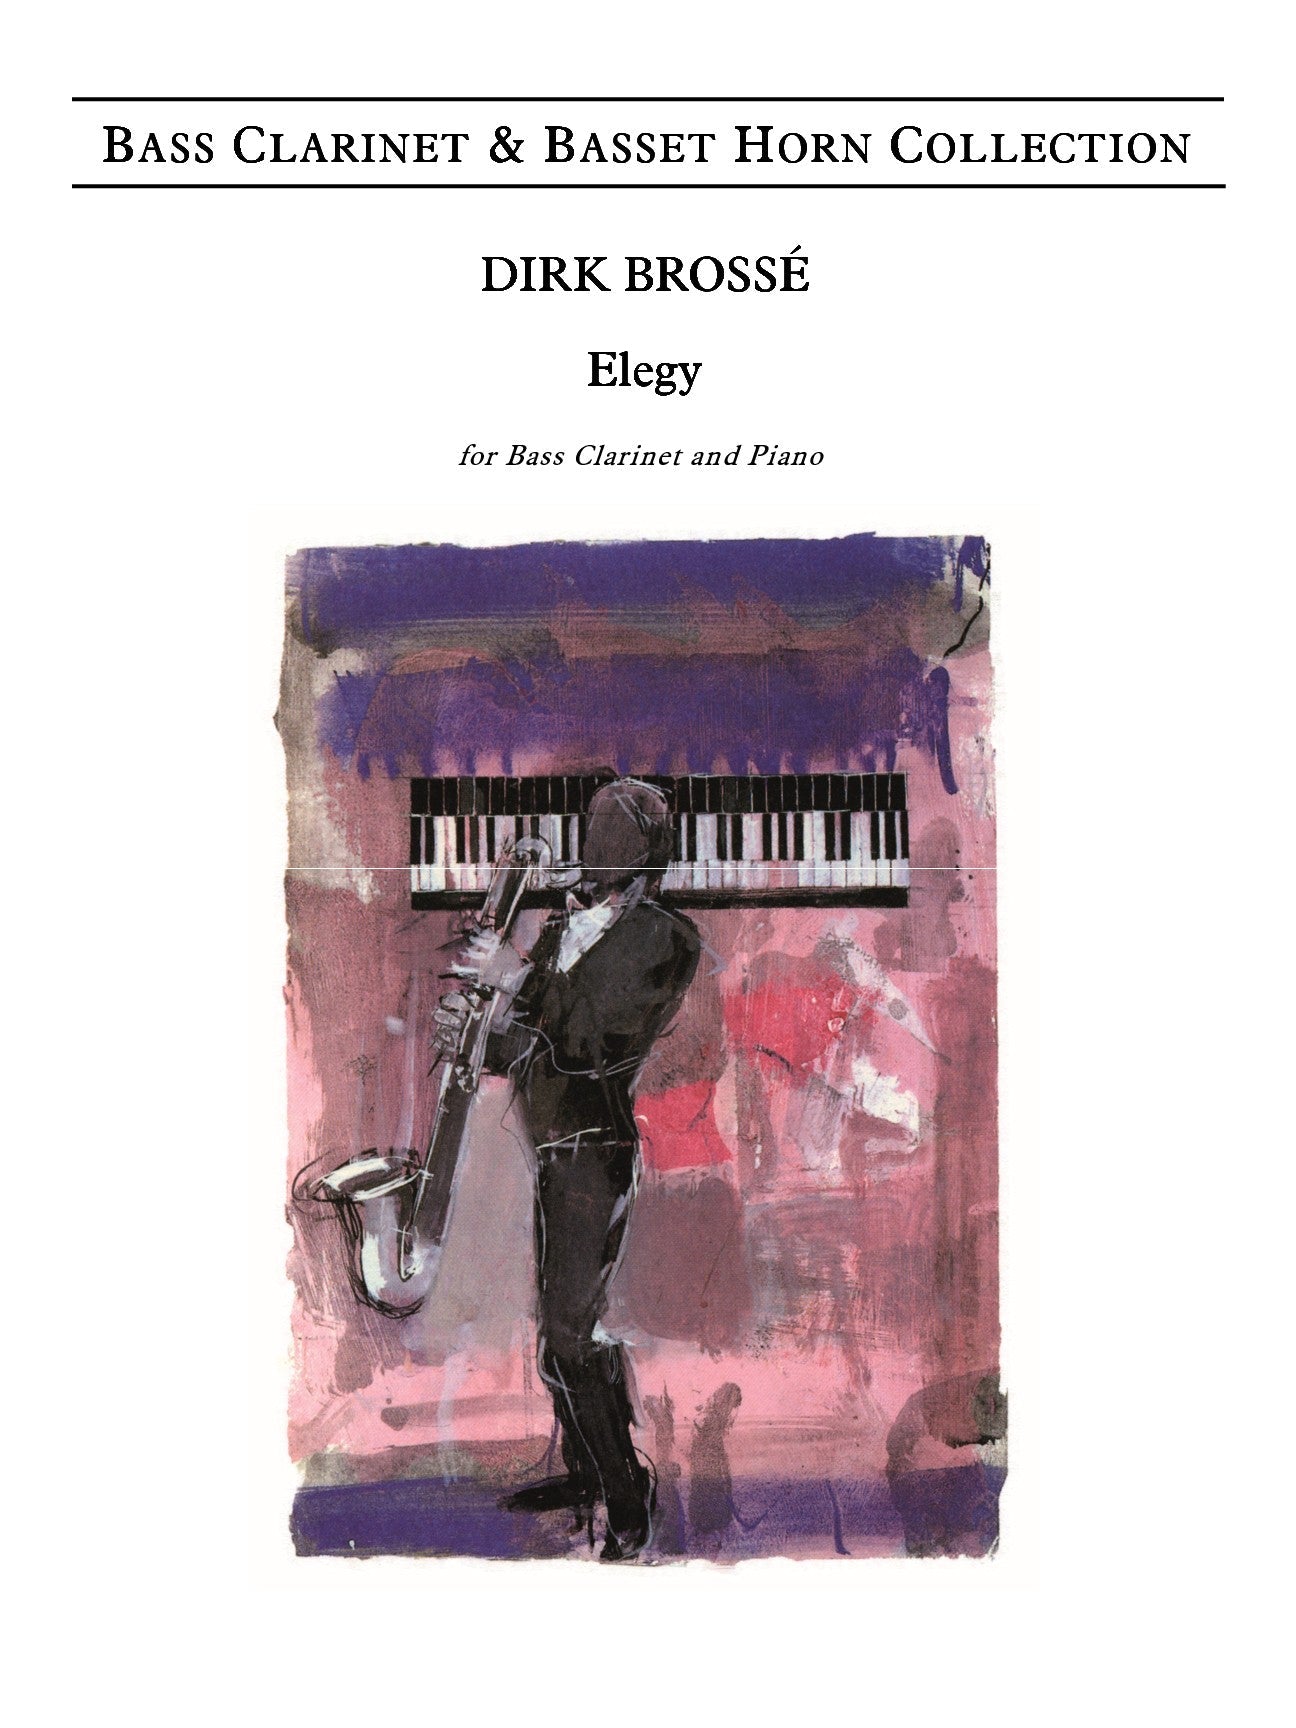 Brossé - Elegy for Bass Clarinet and Piano